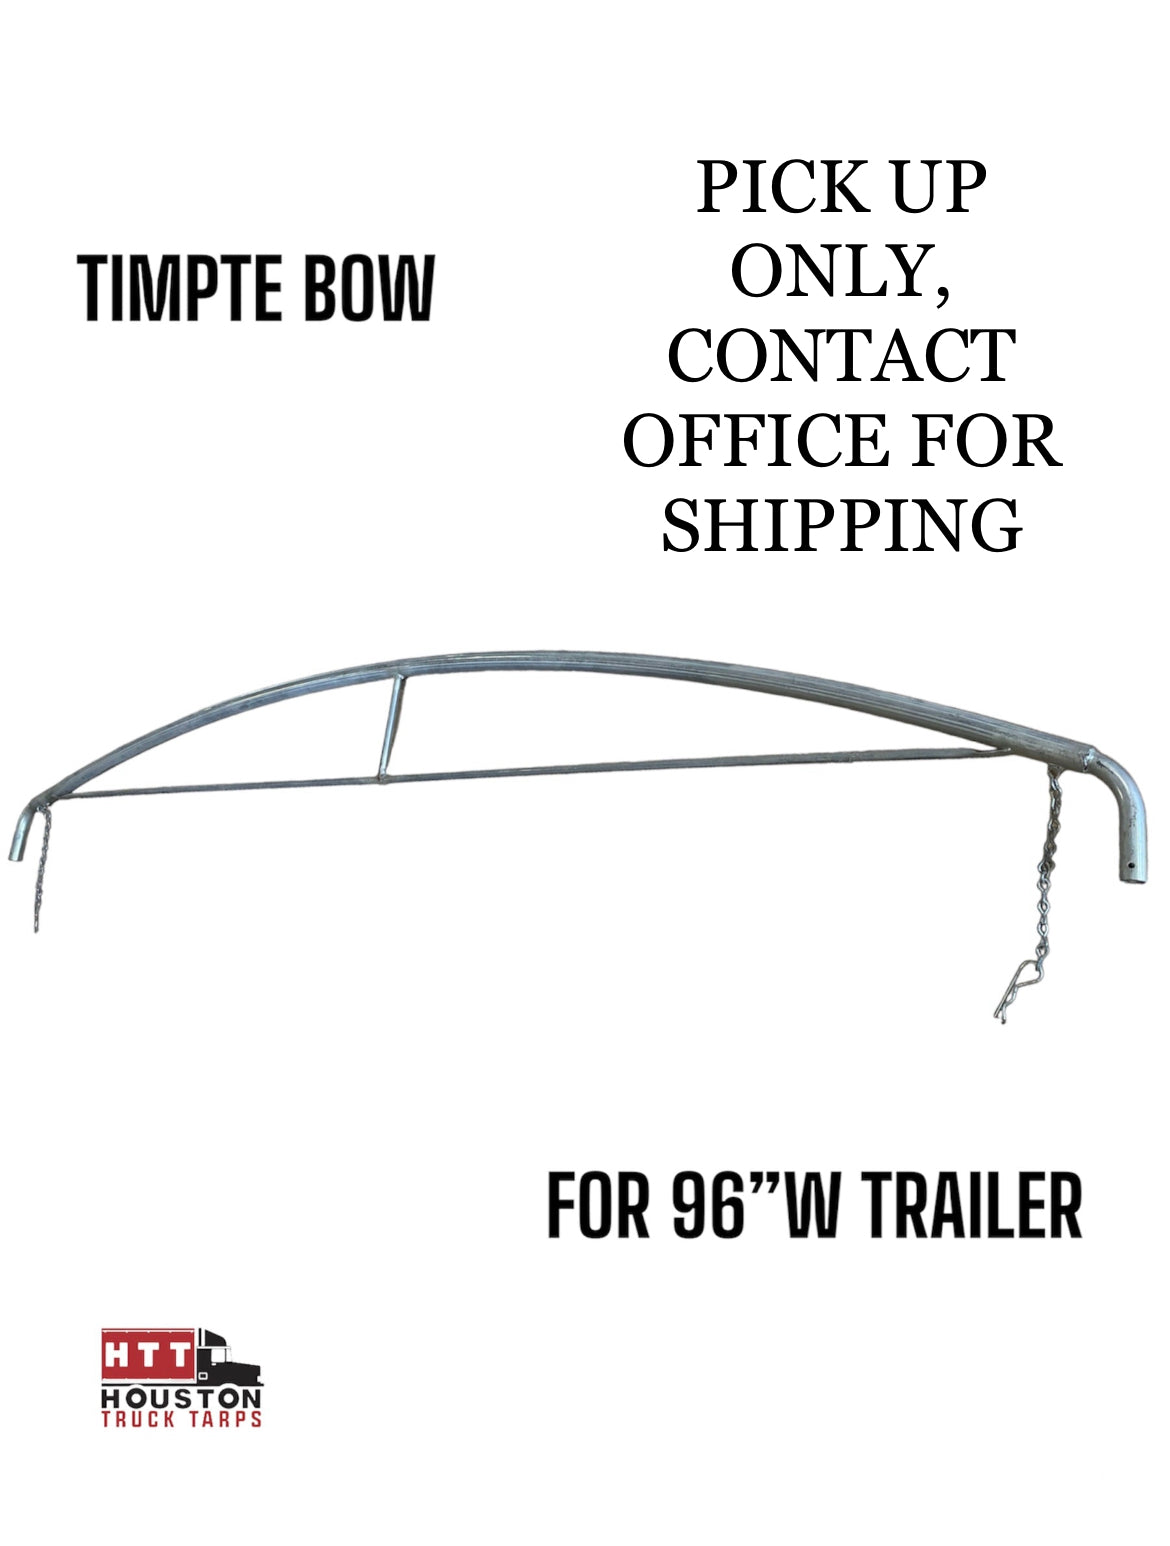 TIMPTE Bow 96”